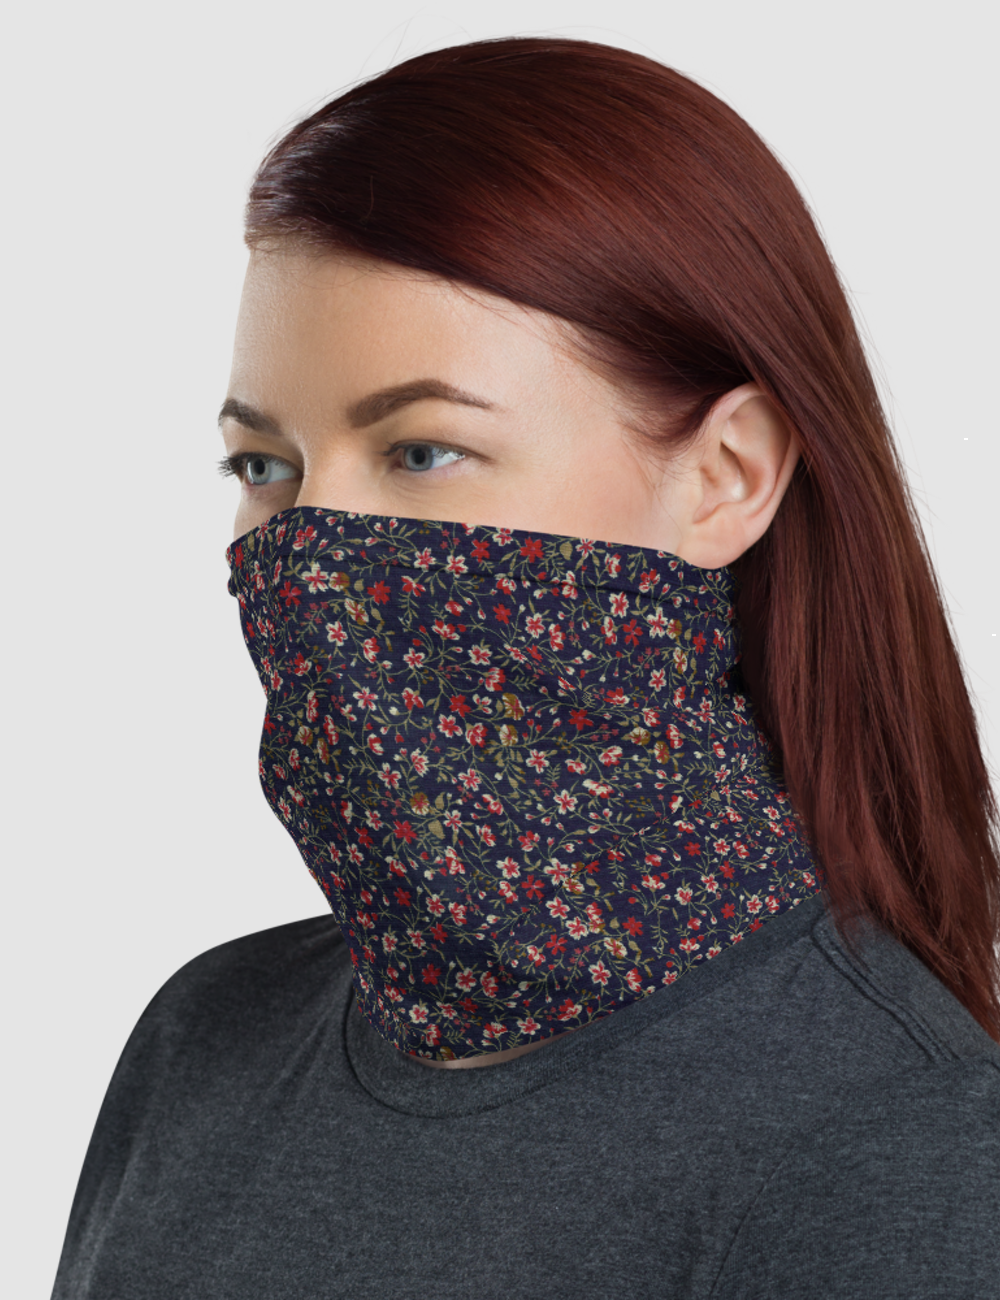 Floral Fabric Print | Neck Gaiter Face Mask OniTakai